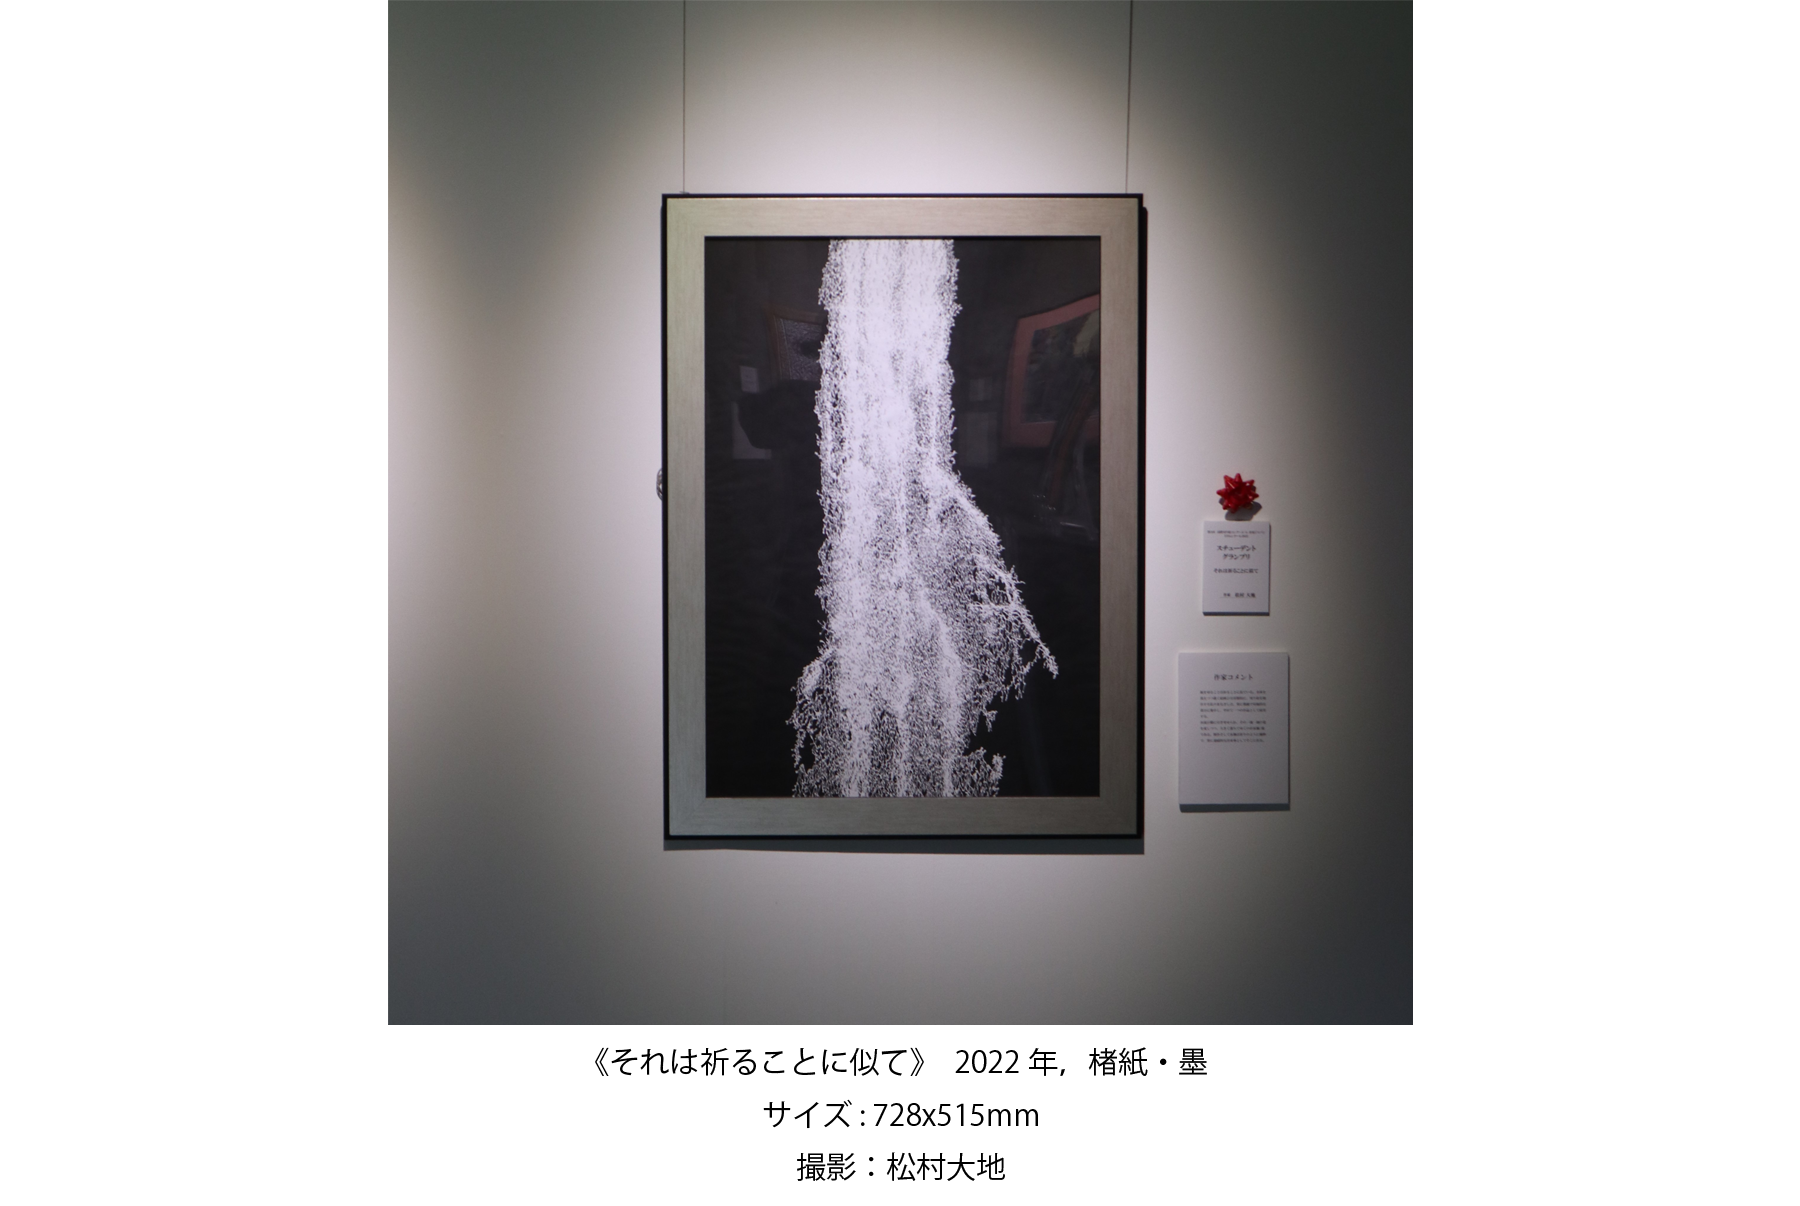 PHOTO: 「第3回国際切り絵コンクール」において本学学生がスチューデントグランプリを受賞し、作品が美術館に収蔵されました。